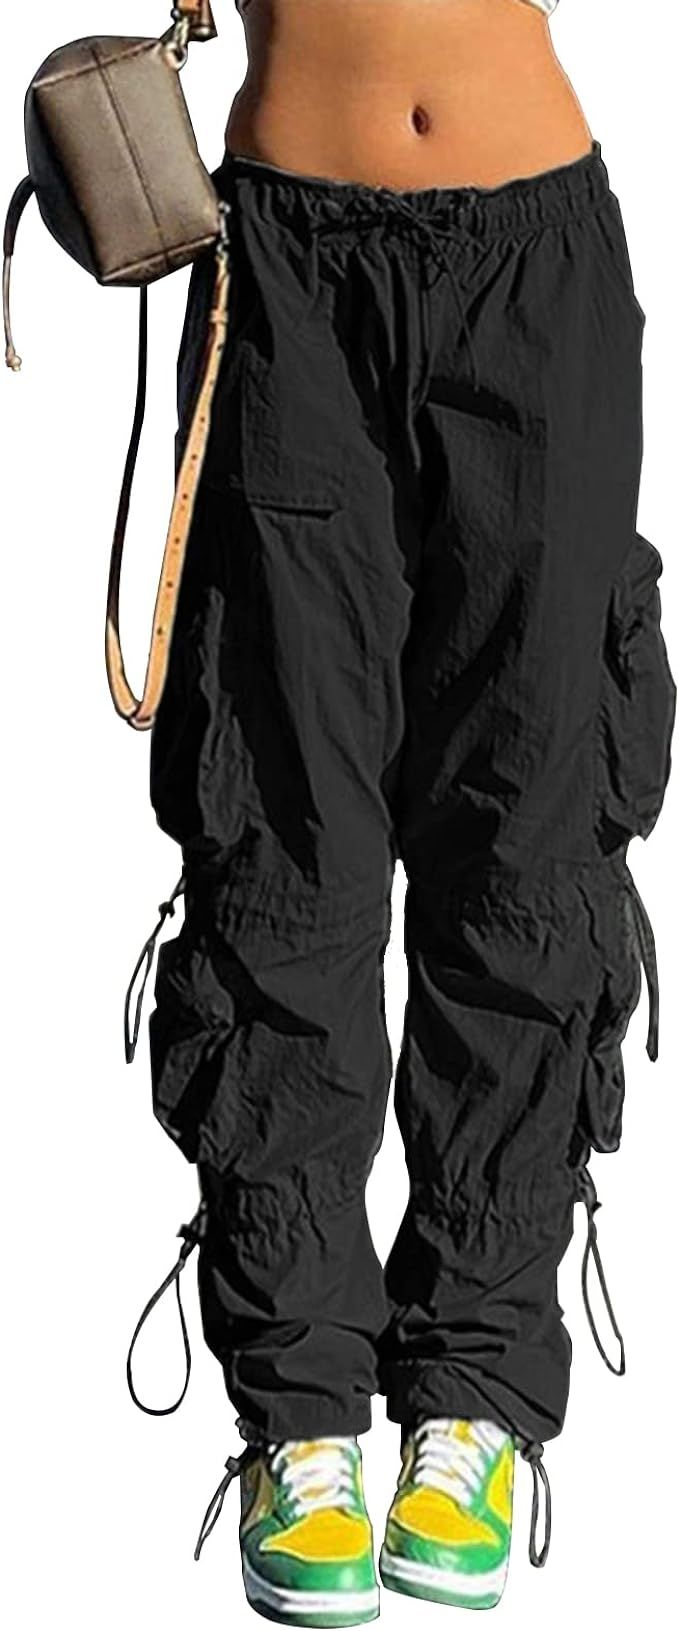 QYANGG Baggy Parachute Pants for Women& Girls Drawstring Elastic Low Waist Ruched Cargo Pants Mul... | Amazon (US)